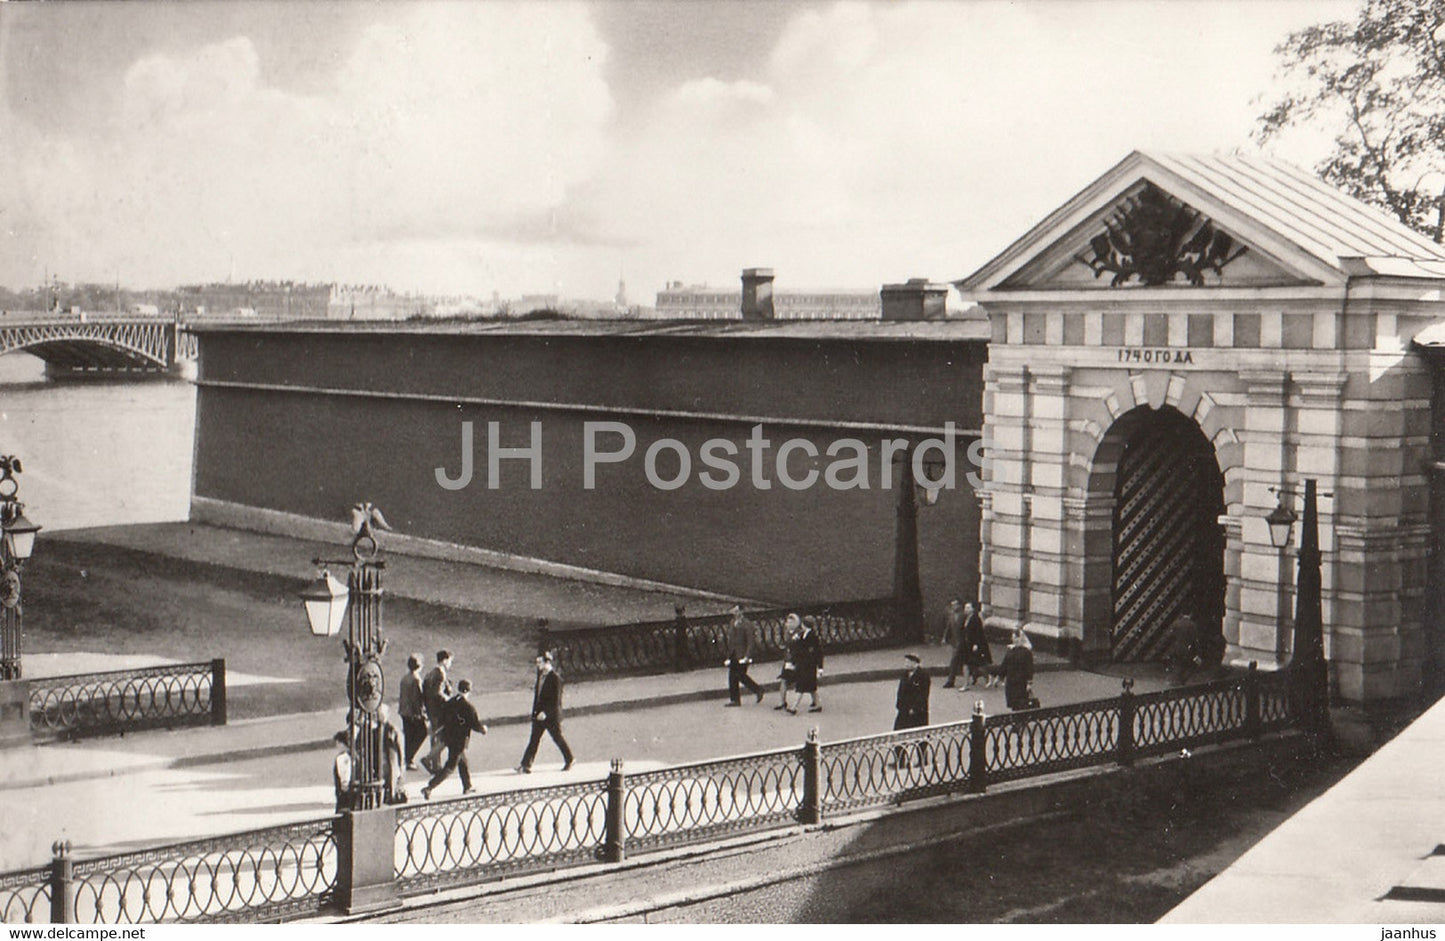 Leningrad - St Petersburg - Peter and Paul Fortress - Ioannovsky Bridge - gate - 1985 - Russia USSR - unused - JH Postcards